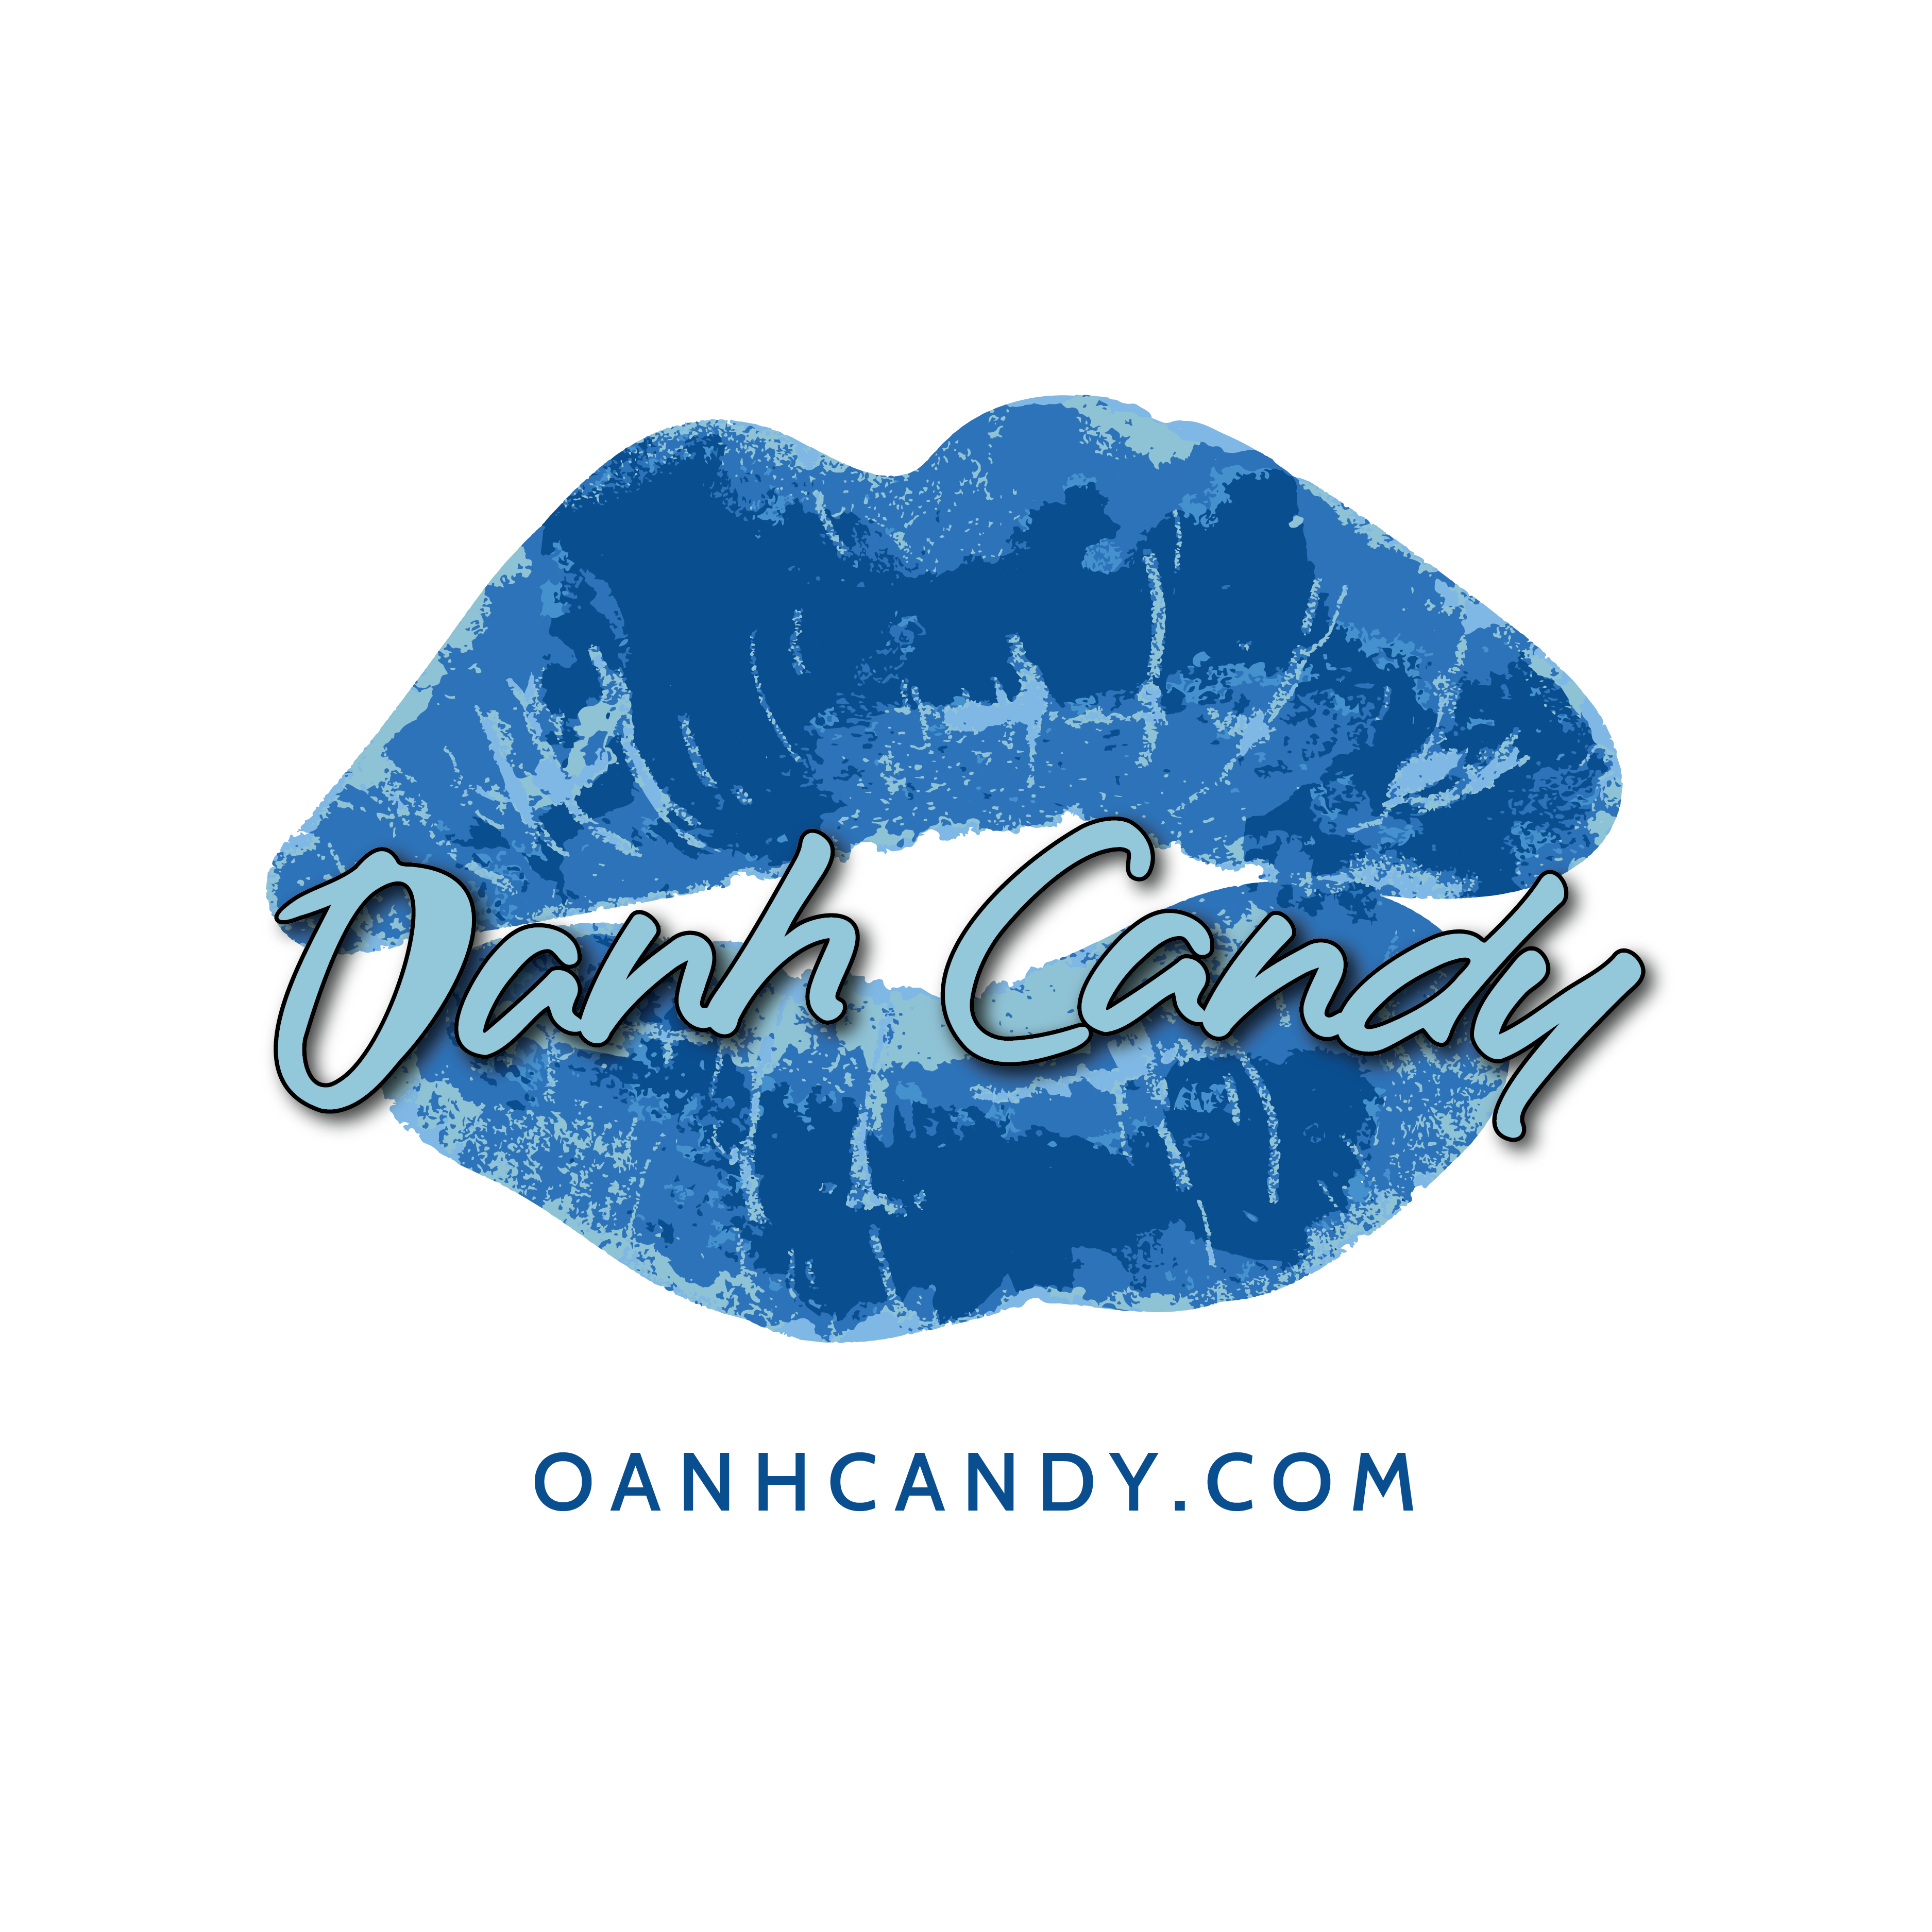 Oanh Candy